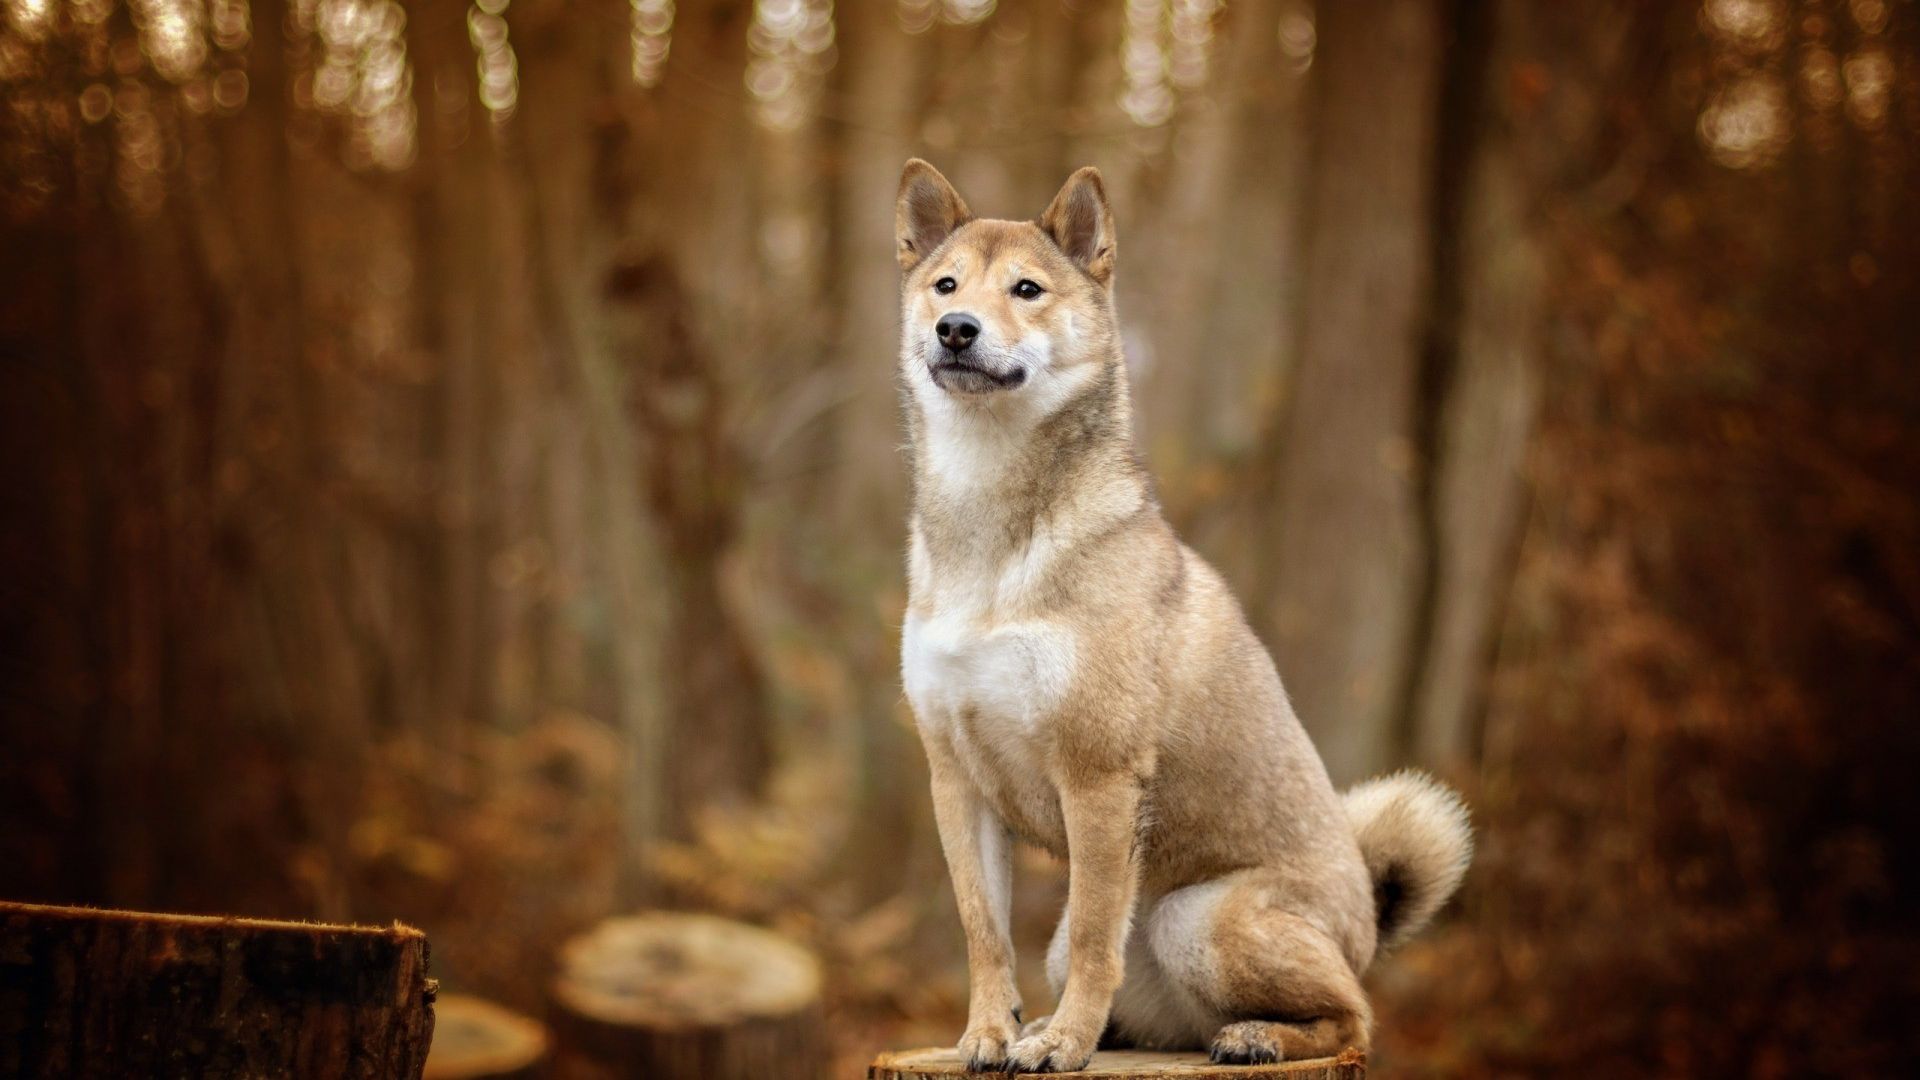 Wallpaper Canaan dog, confident, dog animal